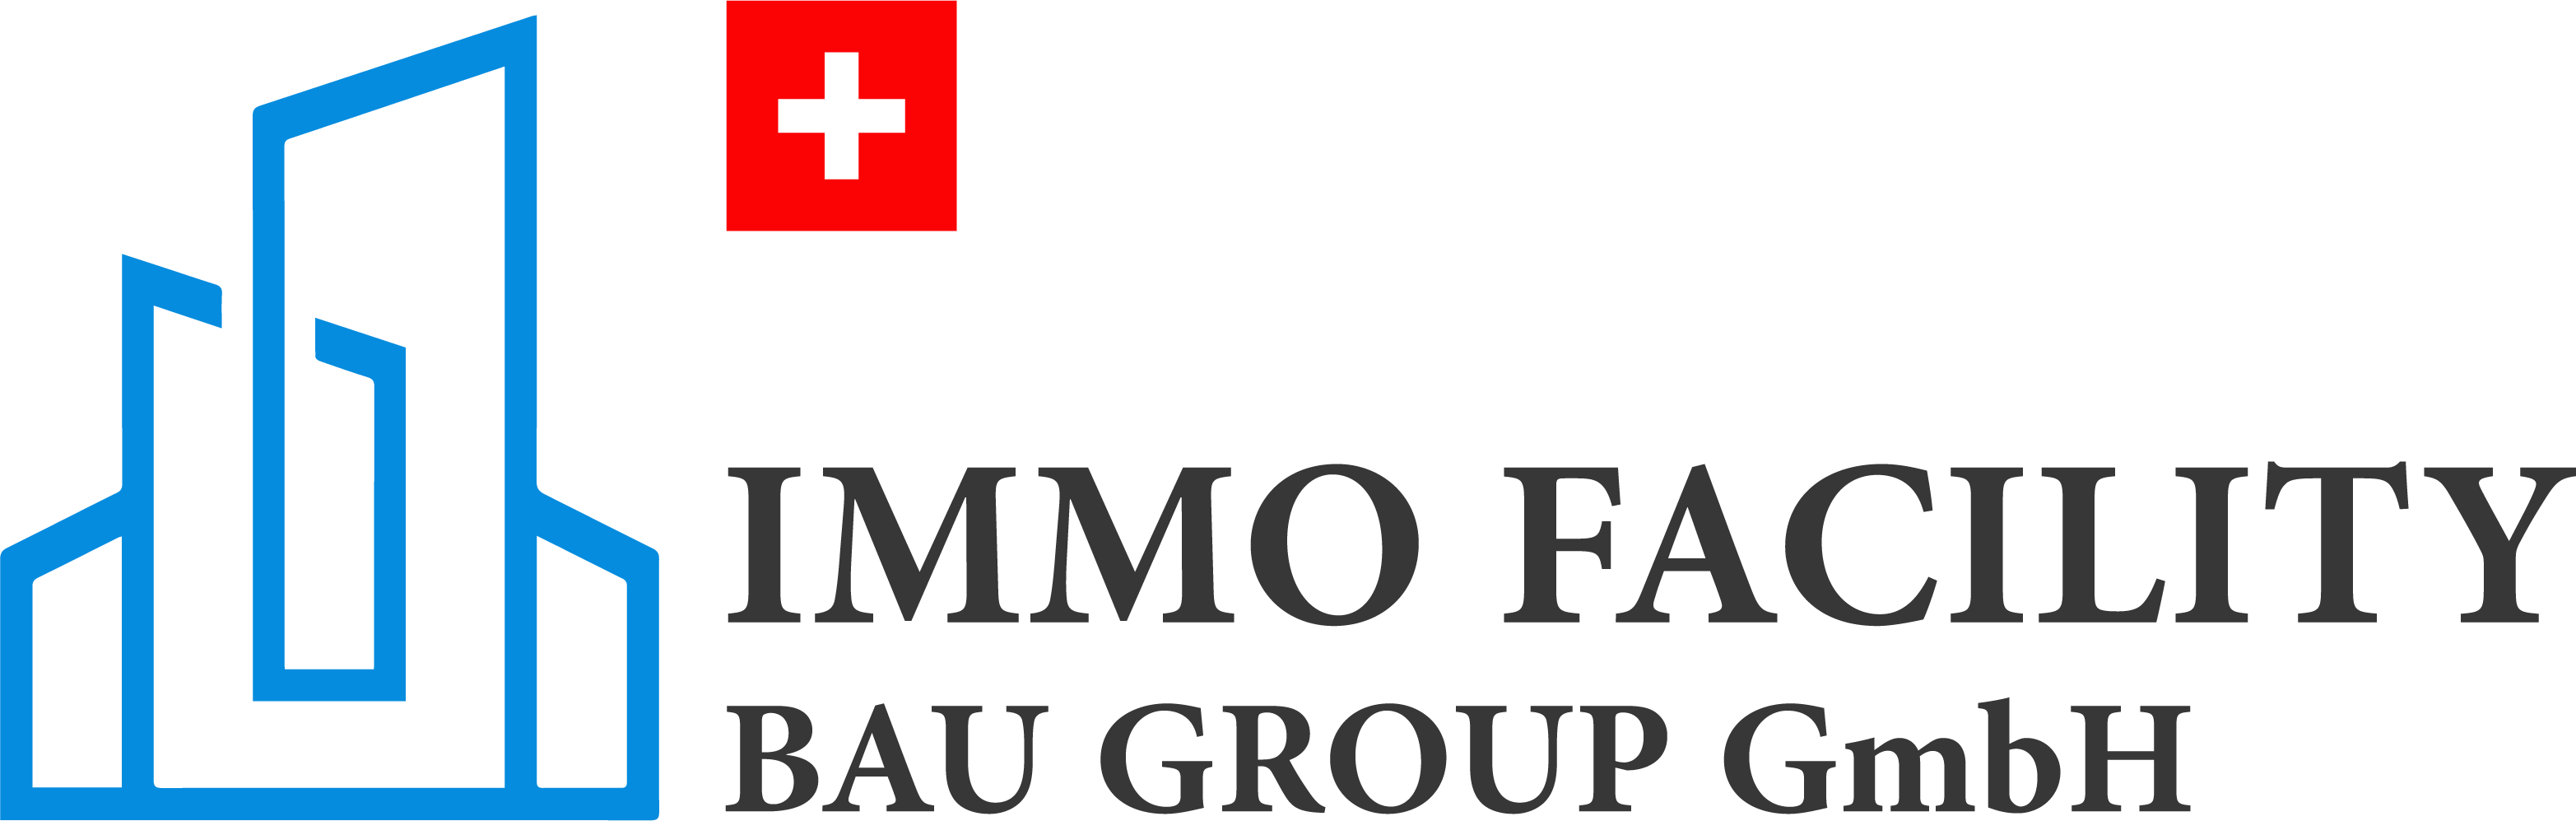 Immo Facility Bau Group GmbH Logo